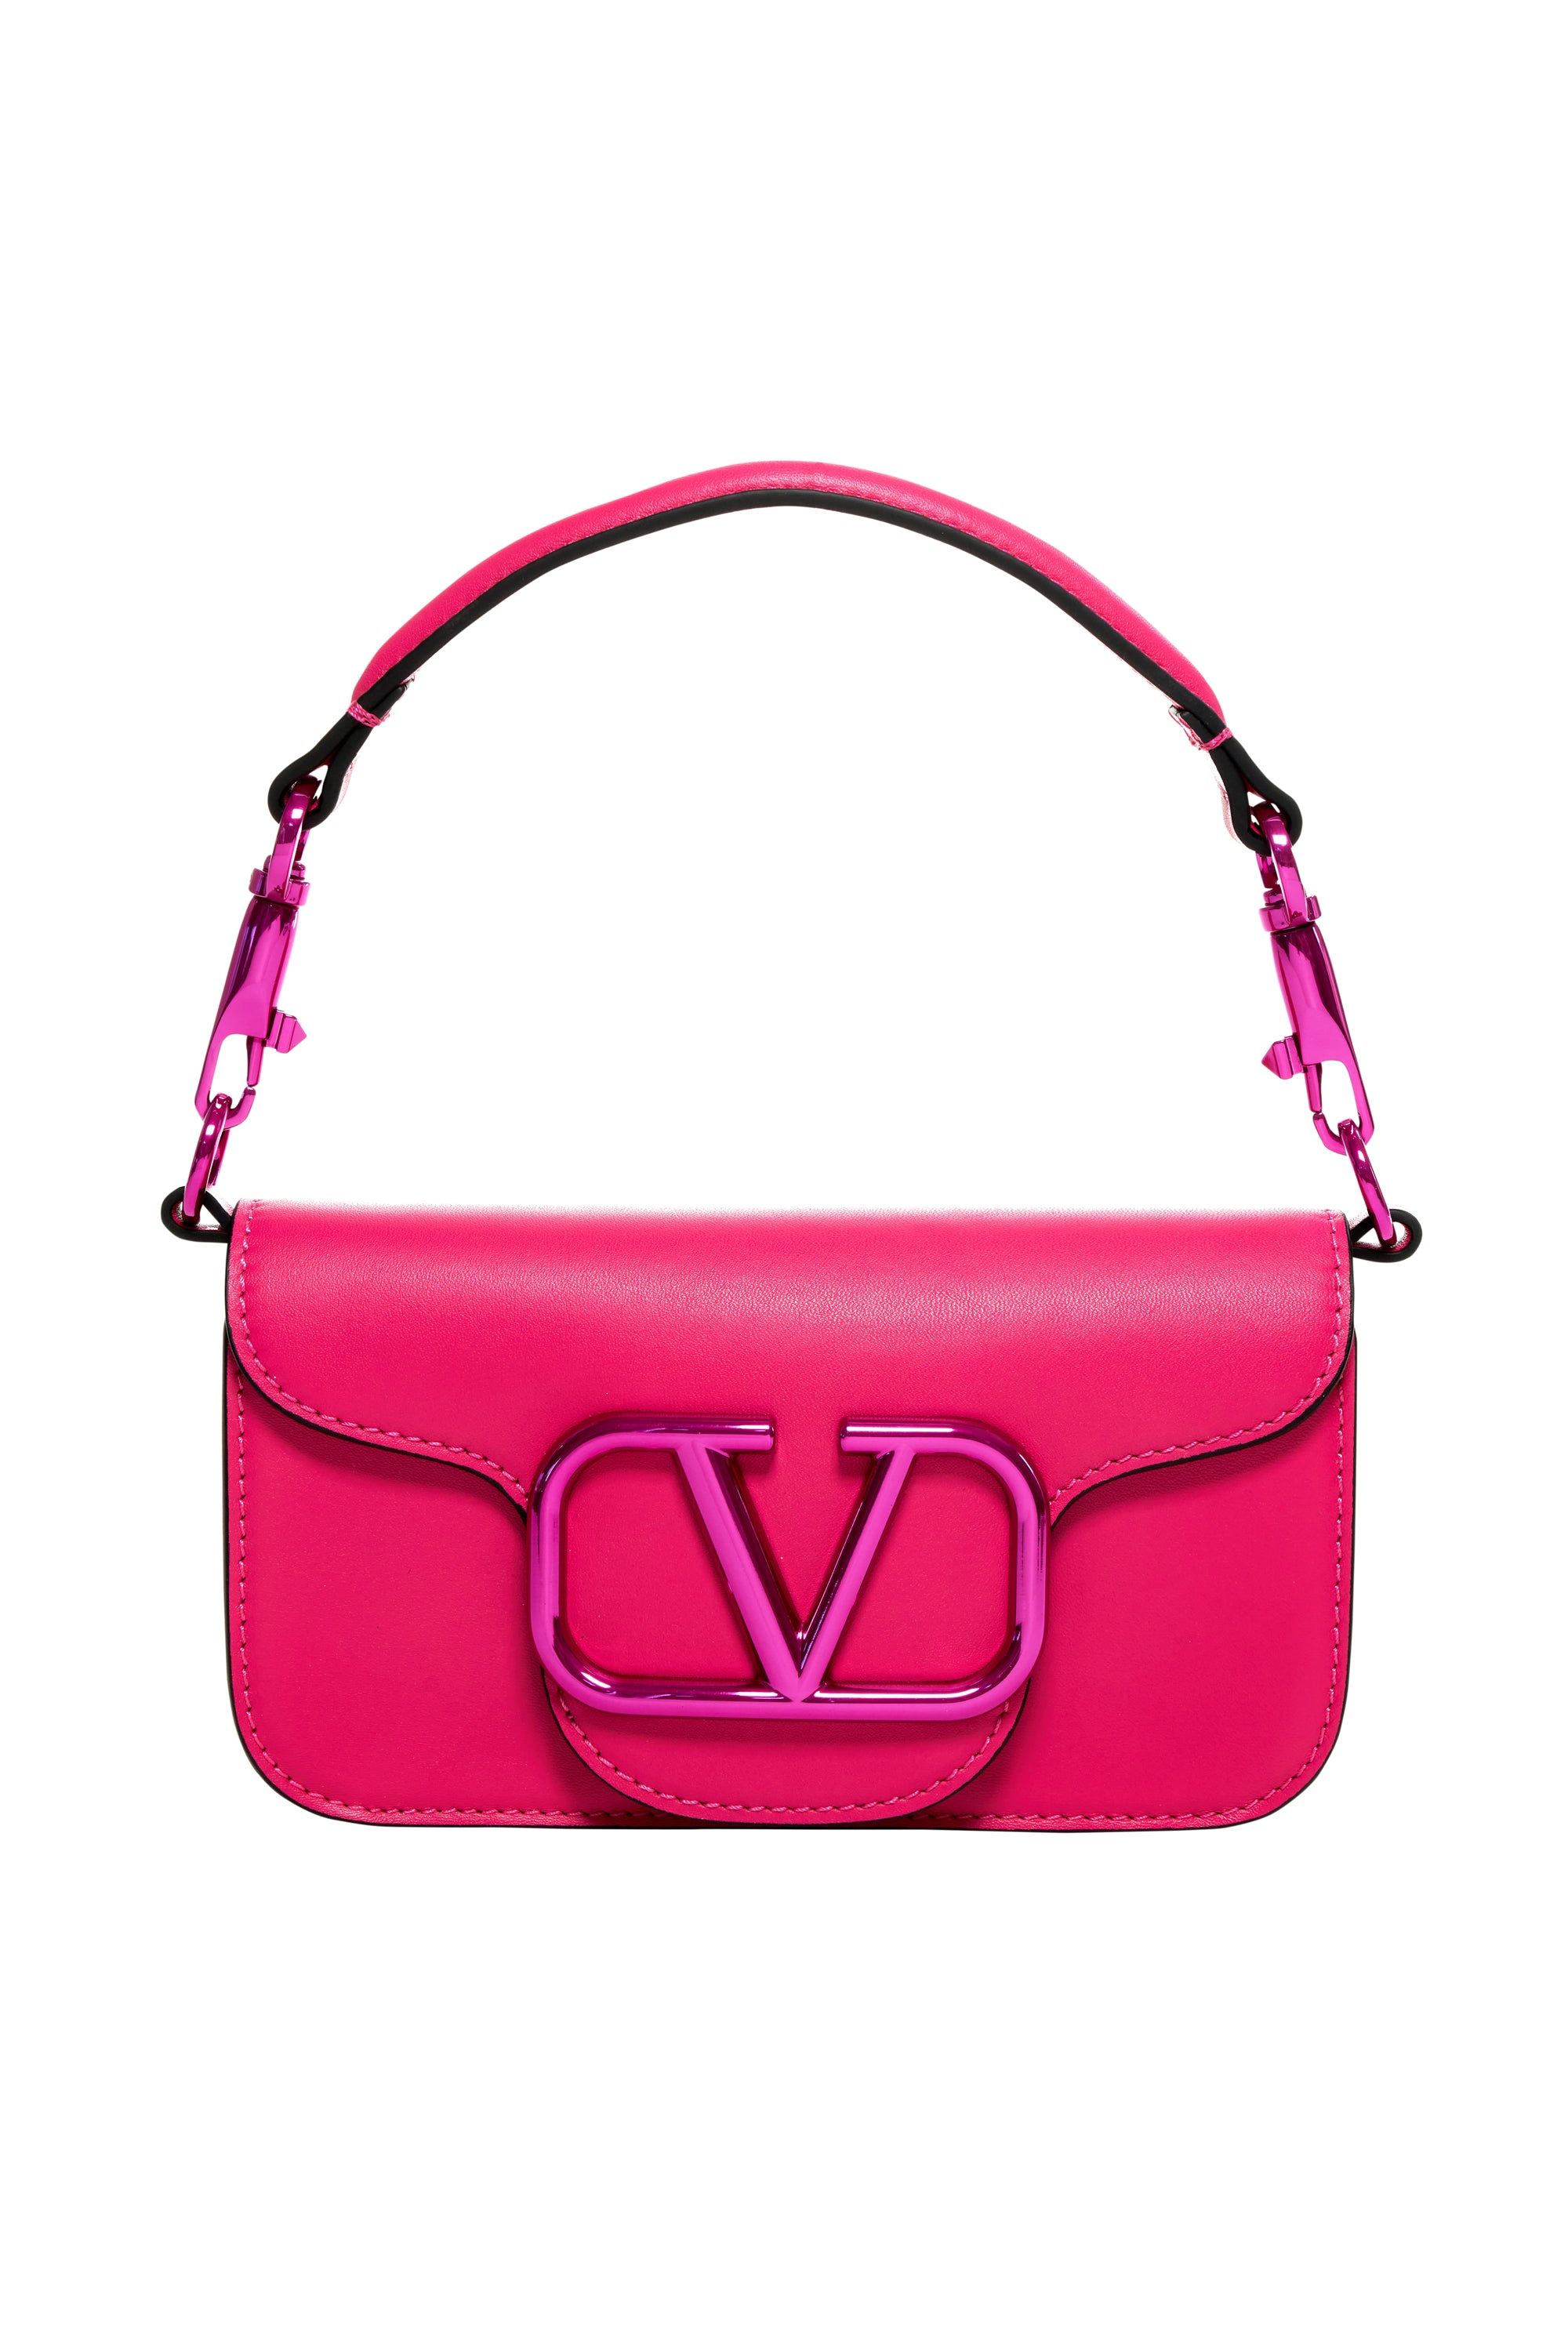 Valentino Pink Super Vee Chrome Purse